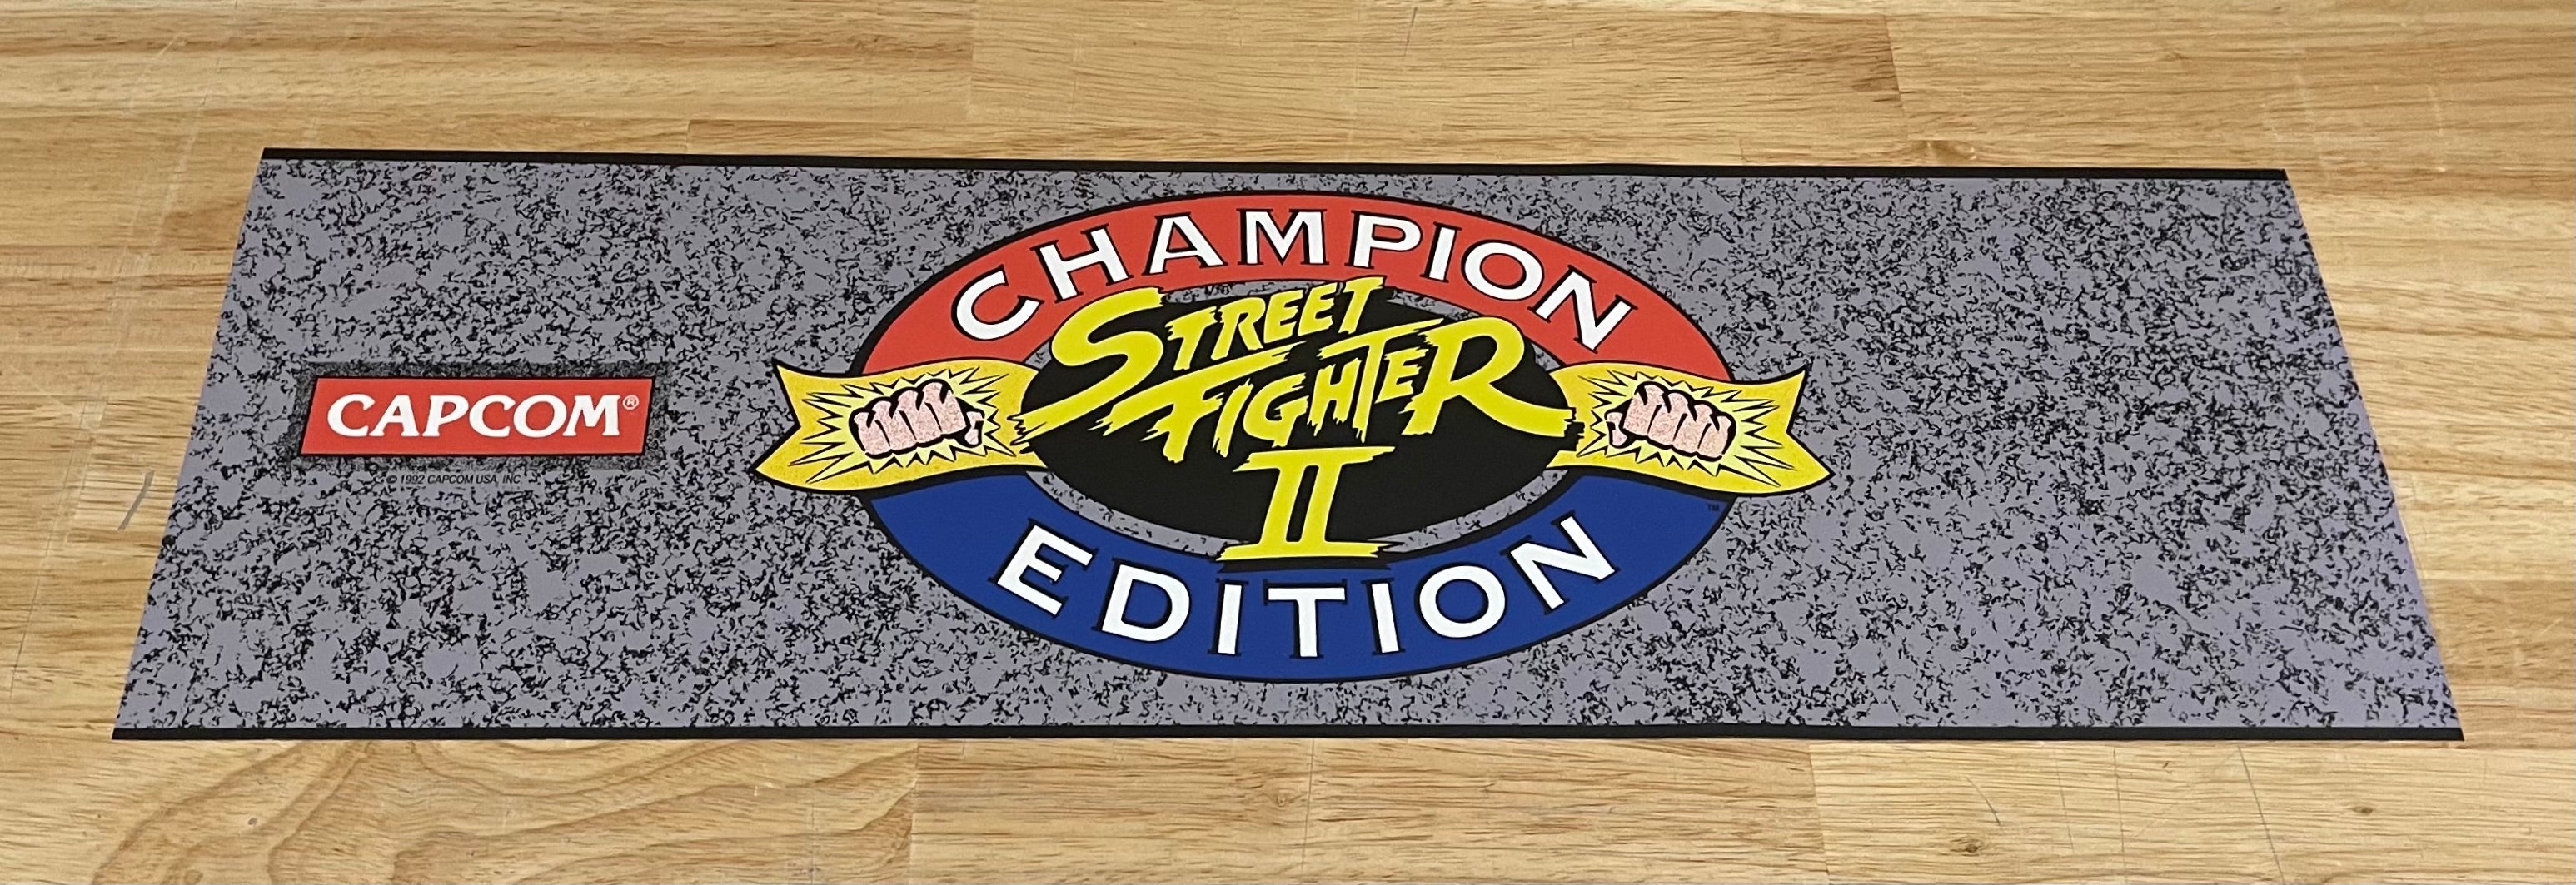 Carpa de Street Fighter Champion Edition